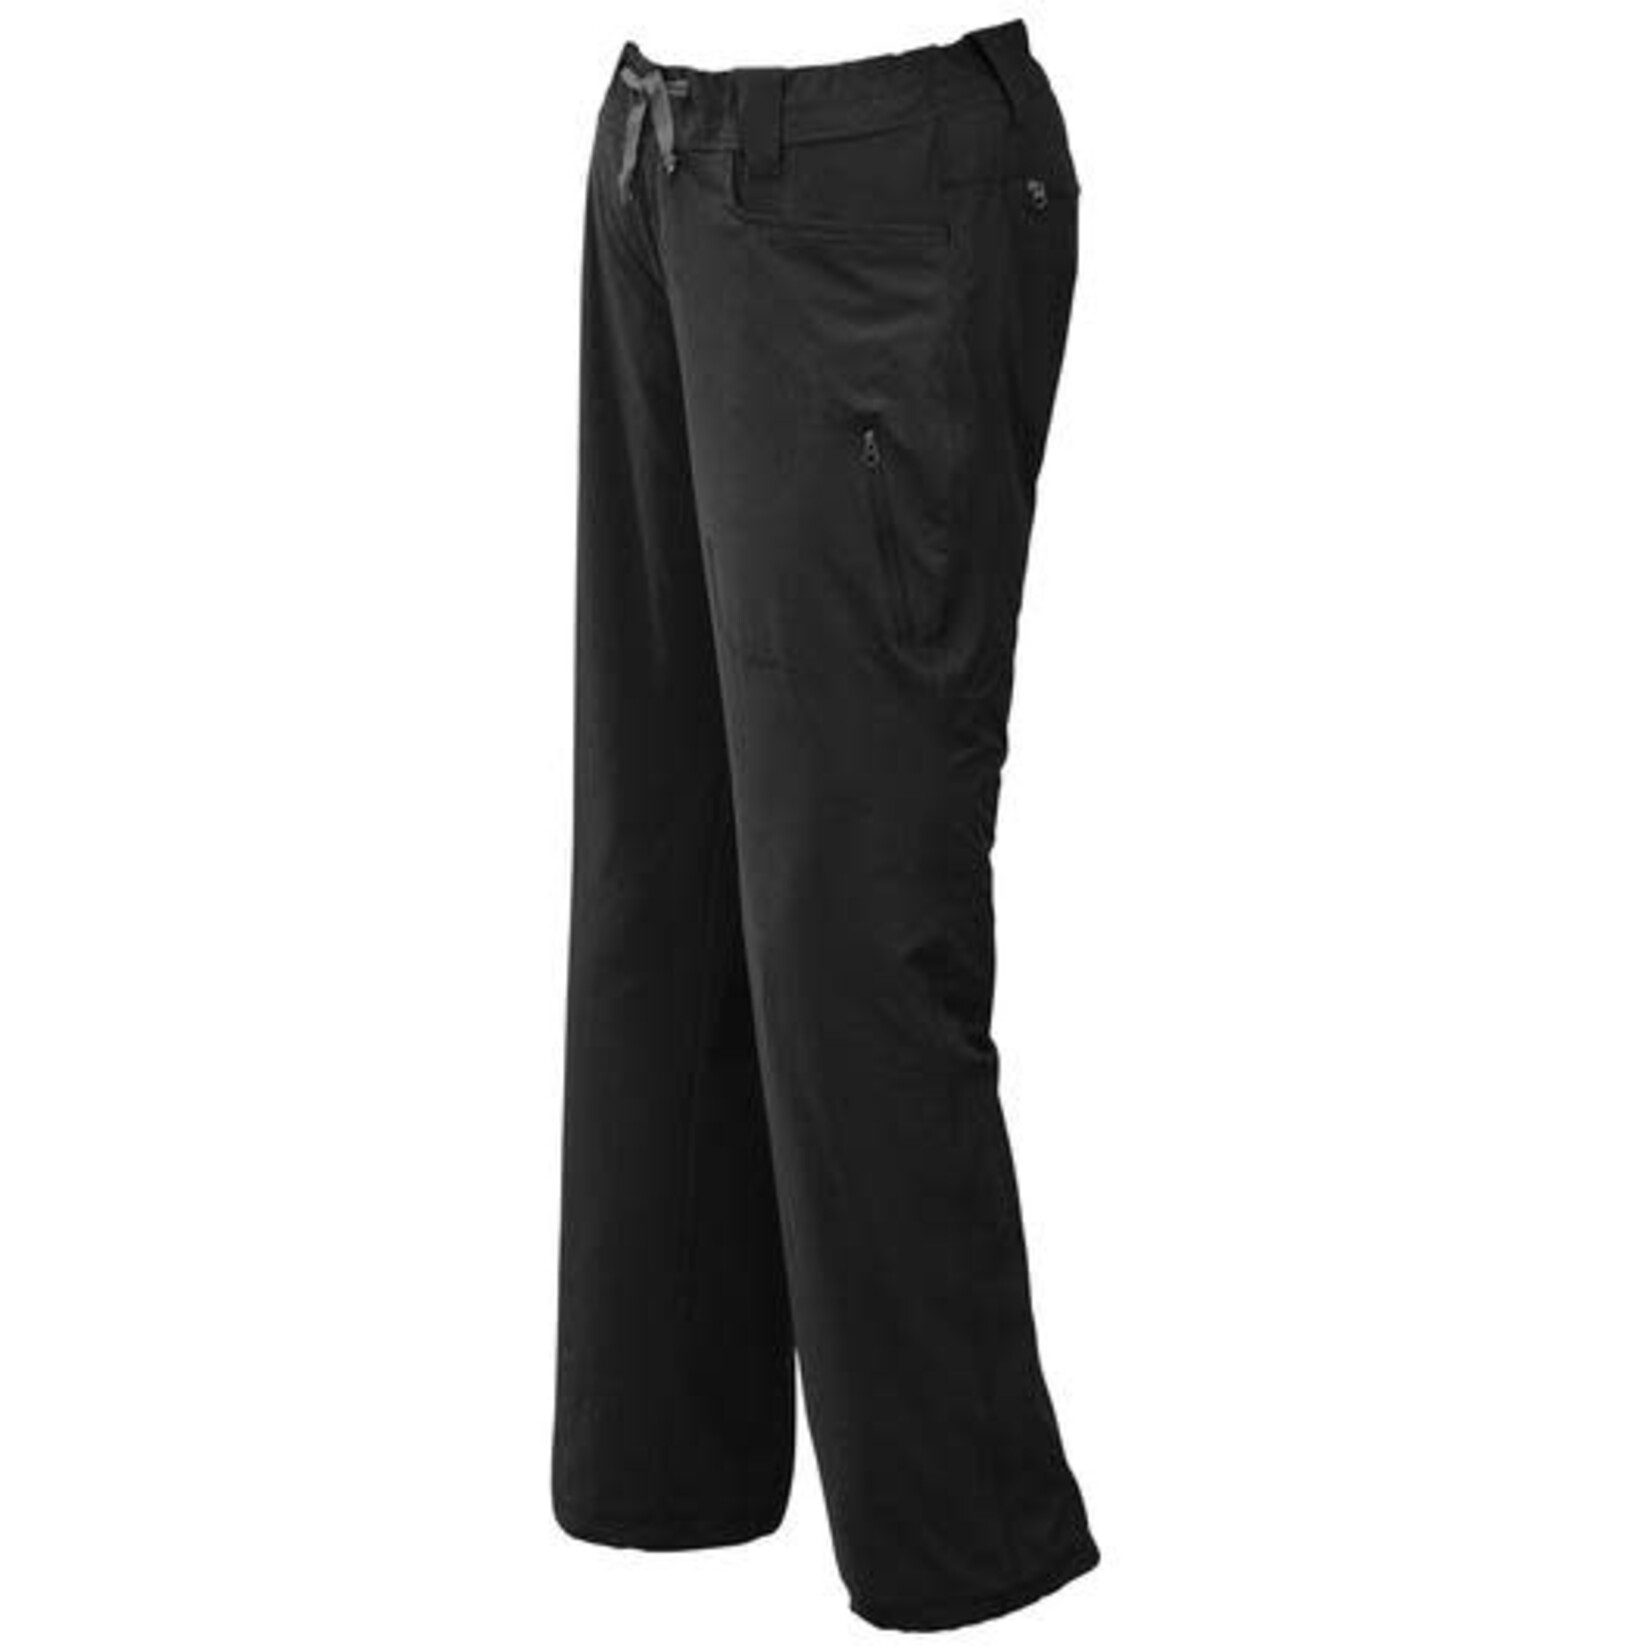 Outdoor Research Pantalons Ferrosi pour femmes